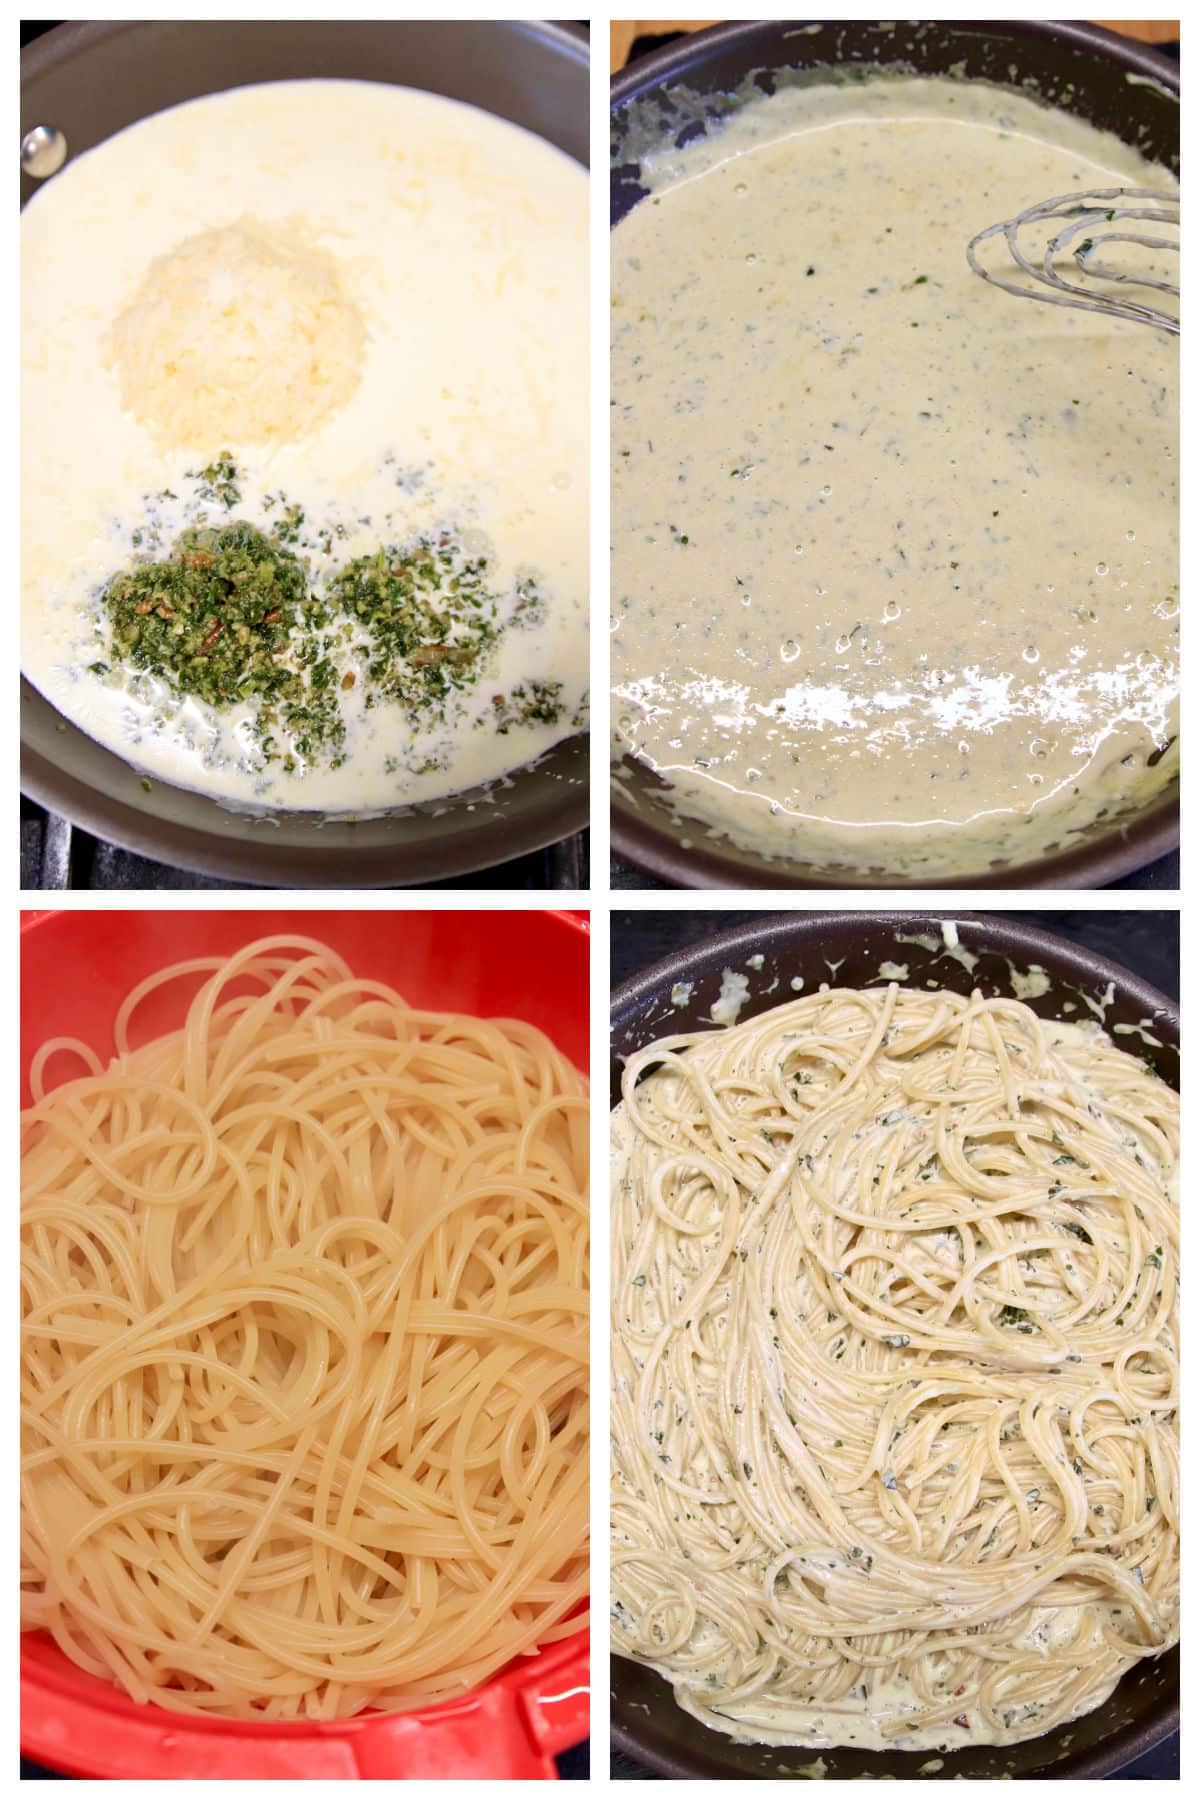 Making creamy pesto spaghetti, sauce/pasta image collage.